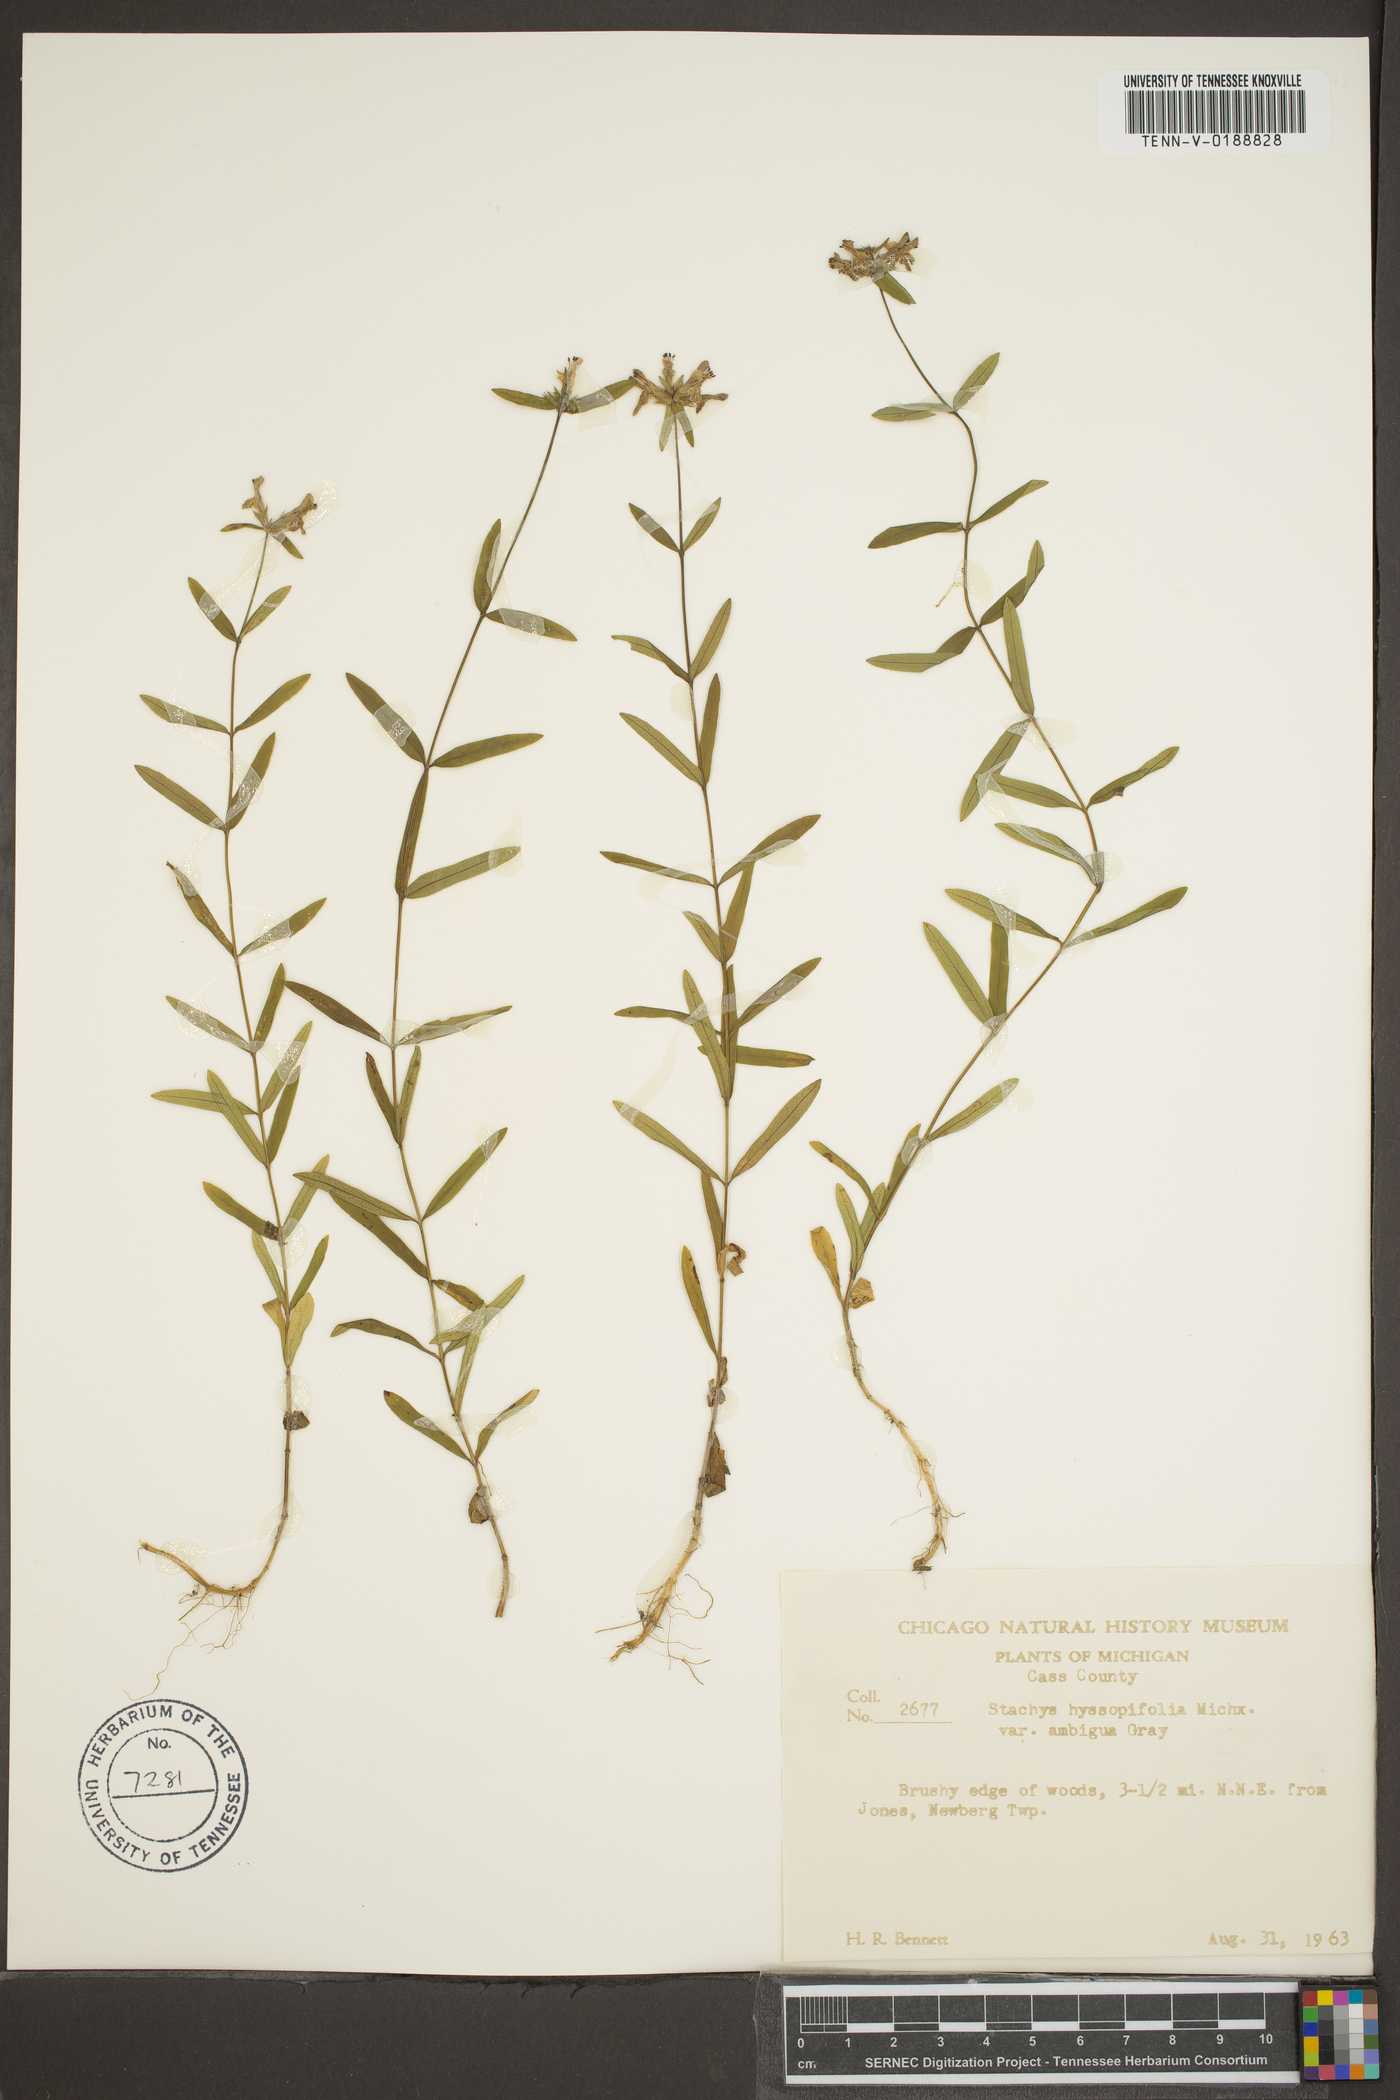 Stachys hyssopifolia var. ambigua image